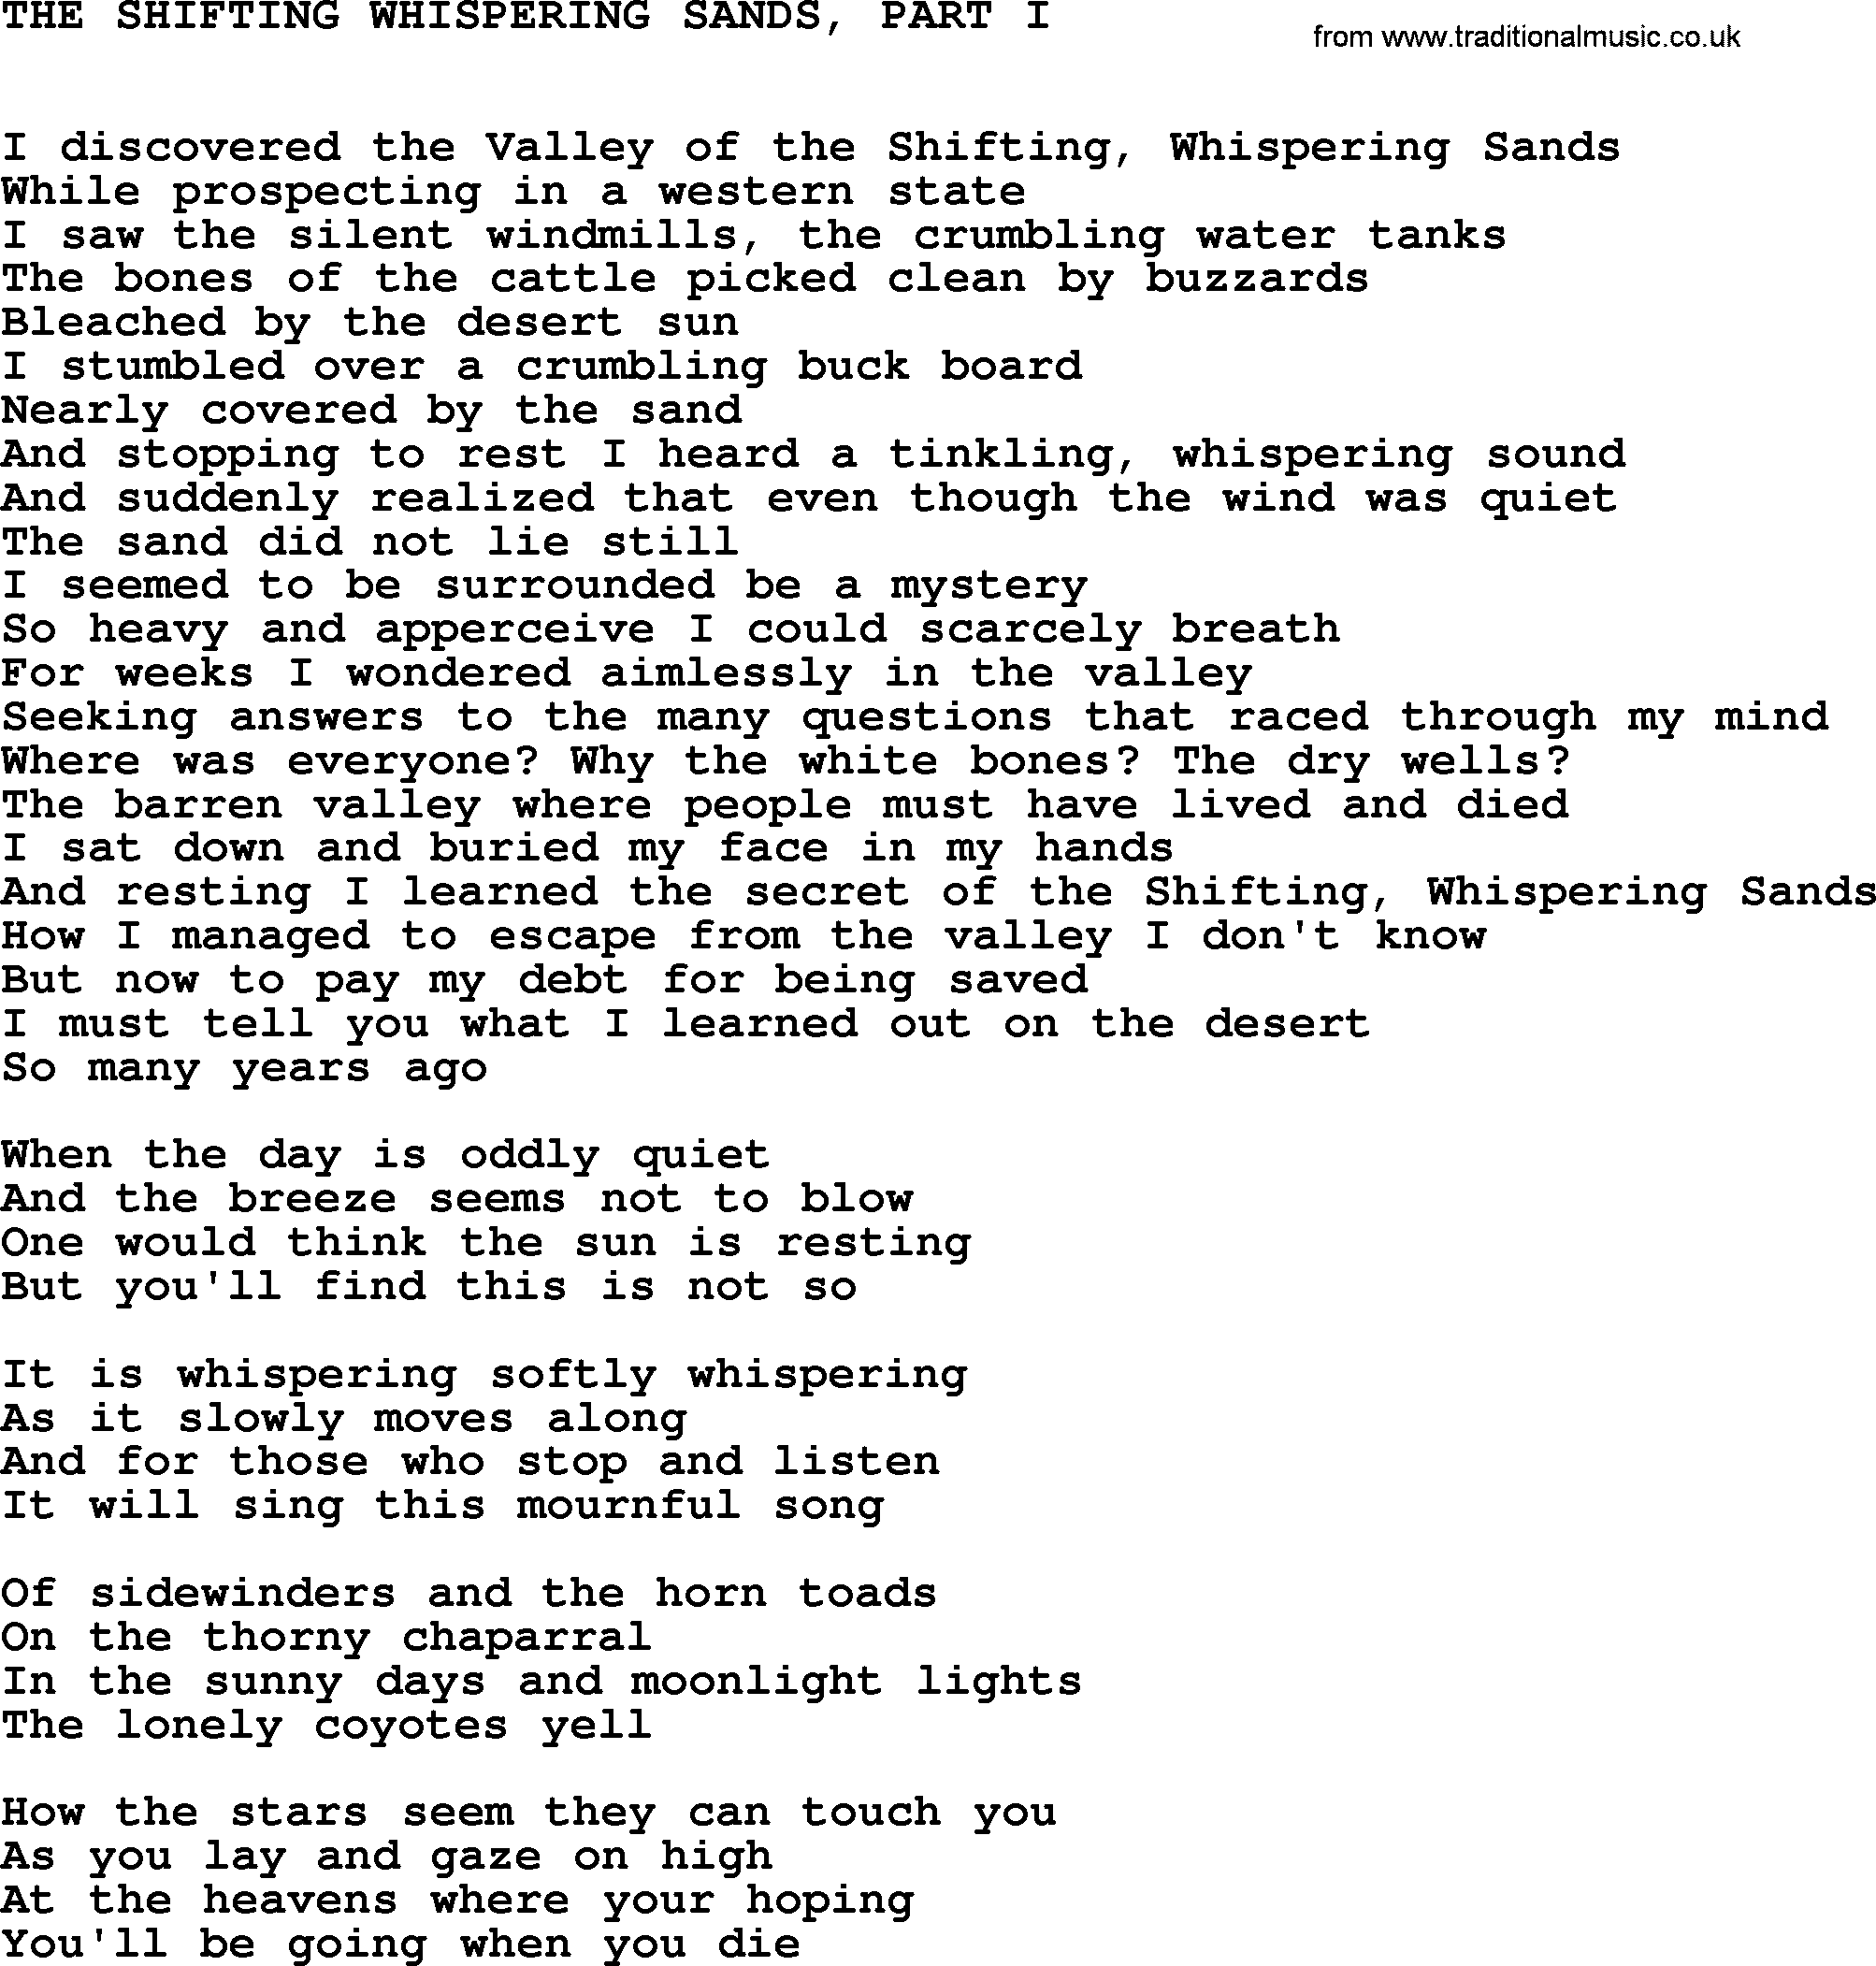 Johnny Cash song The Shifting Whispering Sands, Part I.txt lyrics